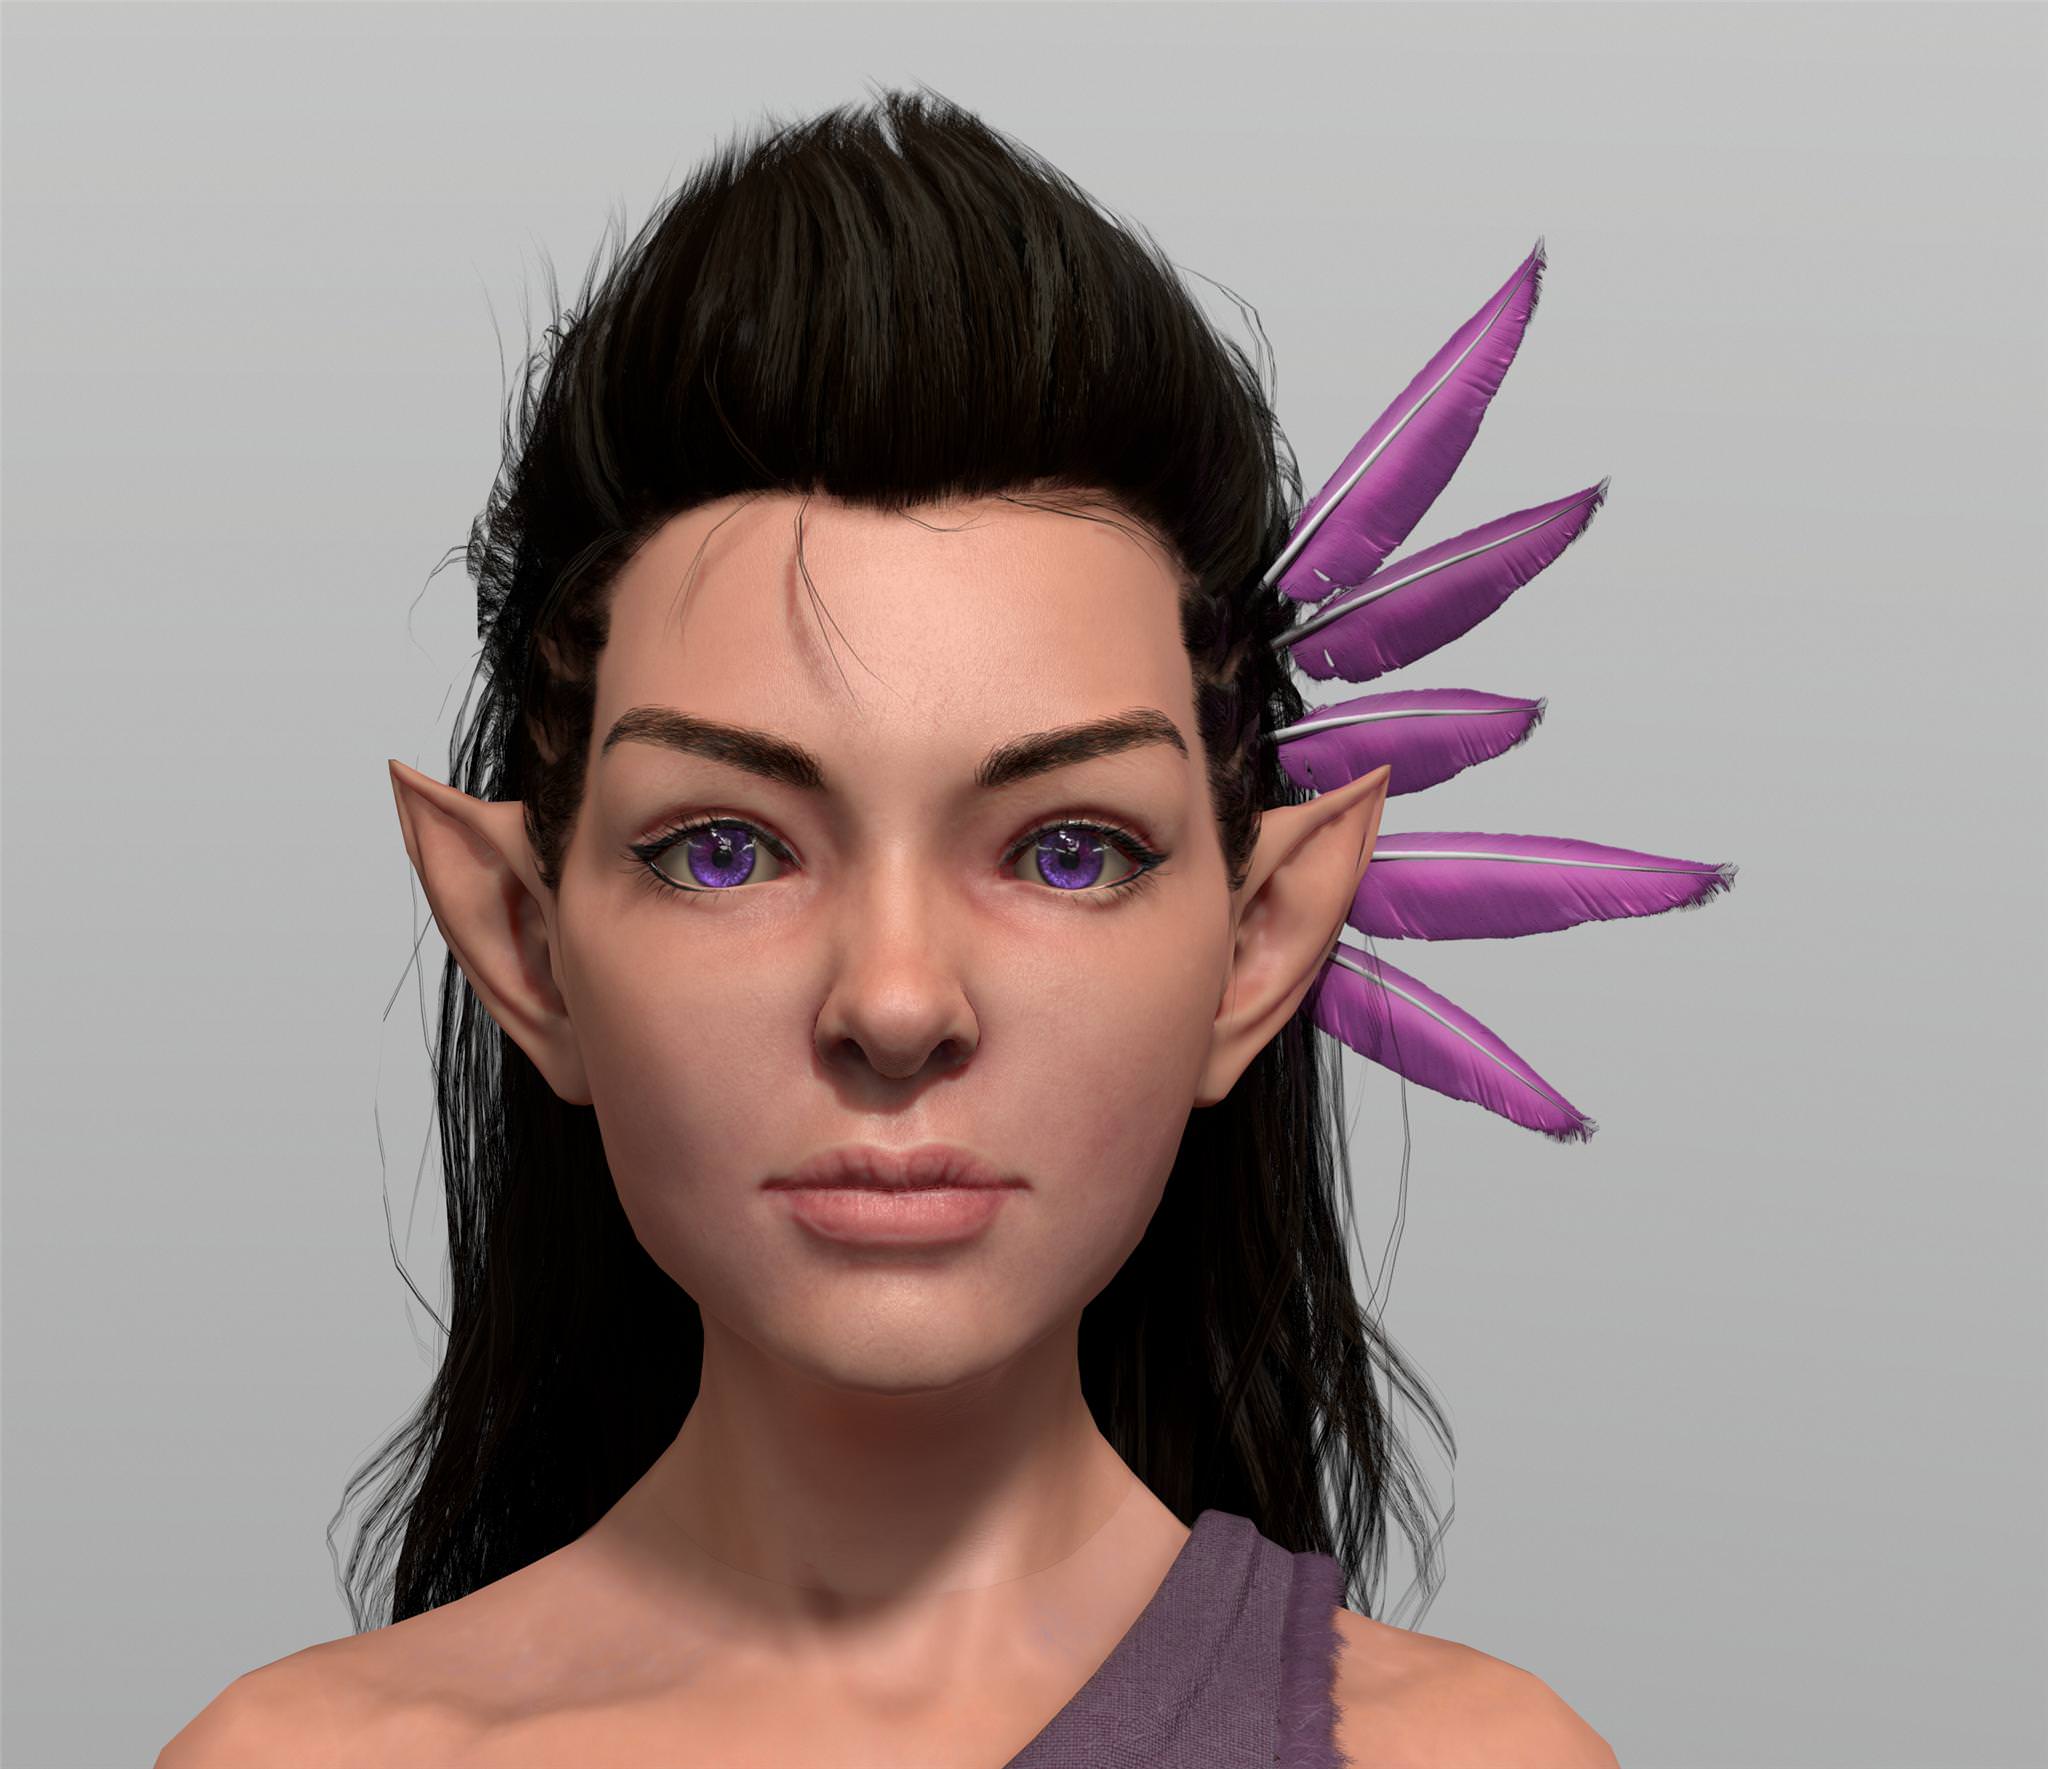 2018-Feb 14: close-up of render of Halfling character model